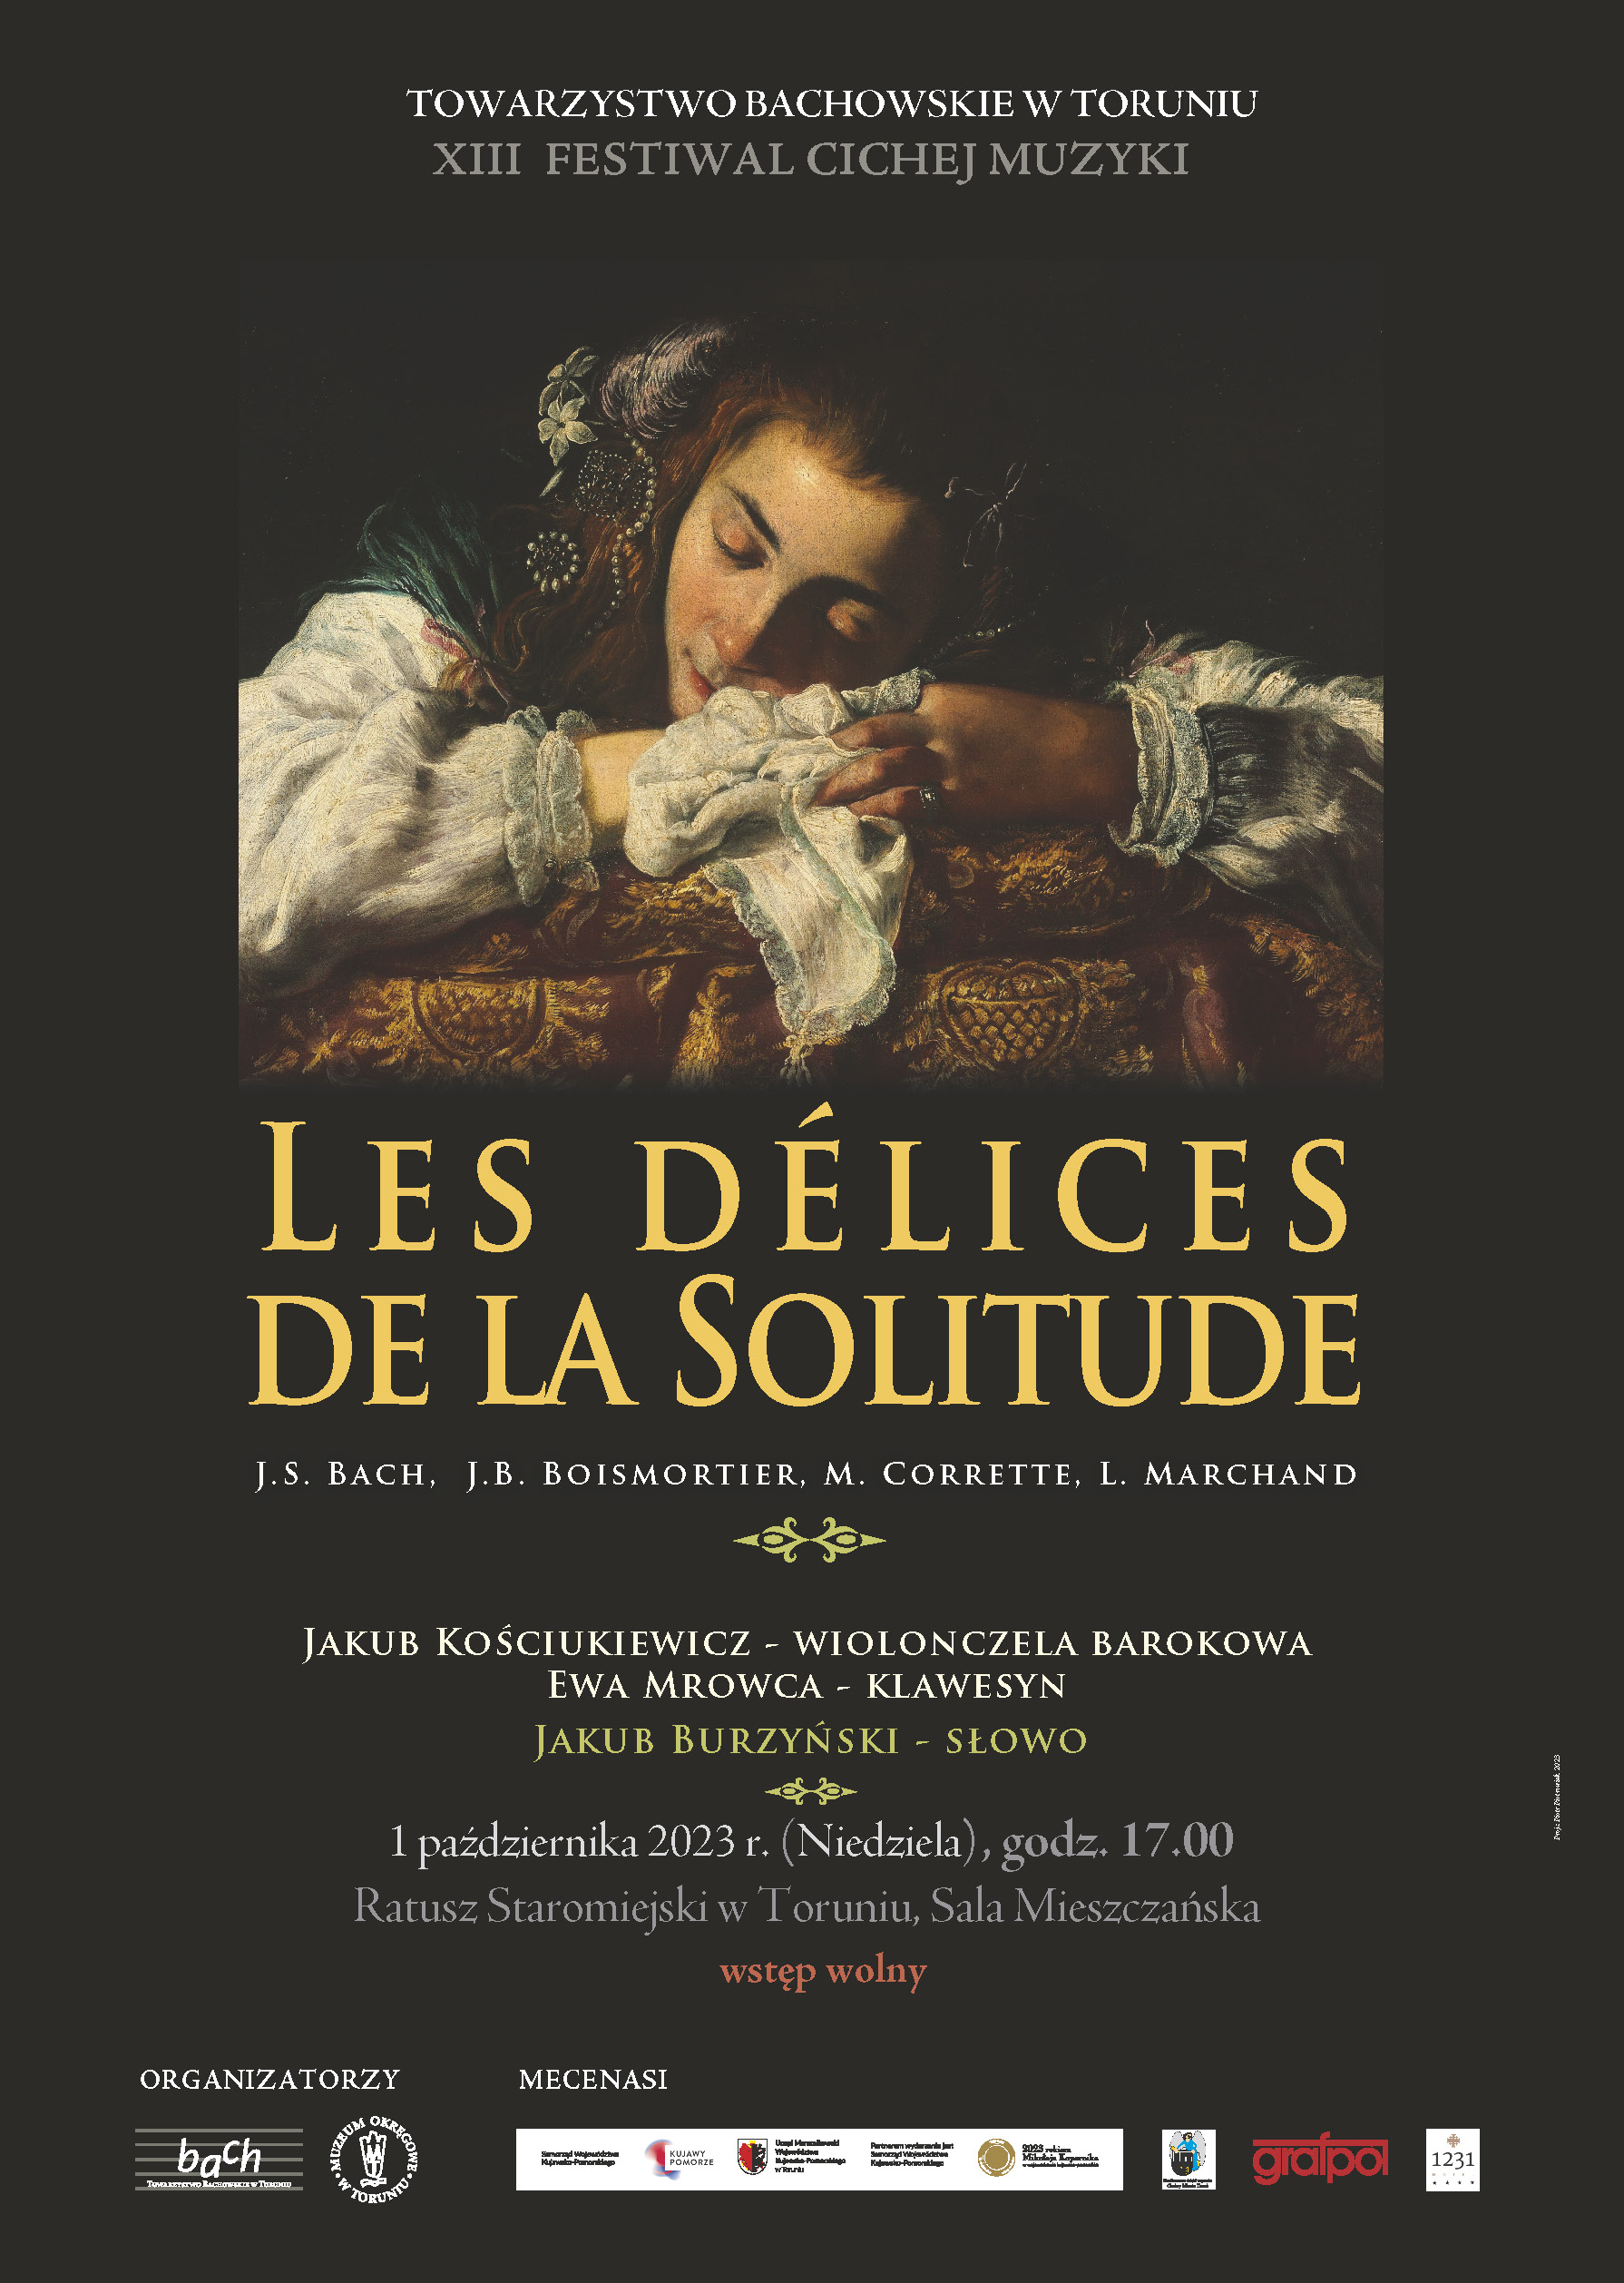 Koncert „Les délices de la Solitude” w ramach XIII Festiwalu Cichej Muzyki